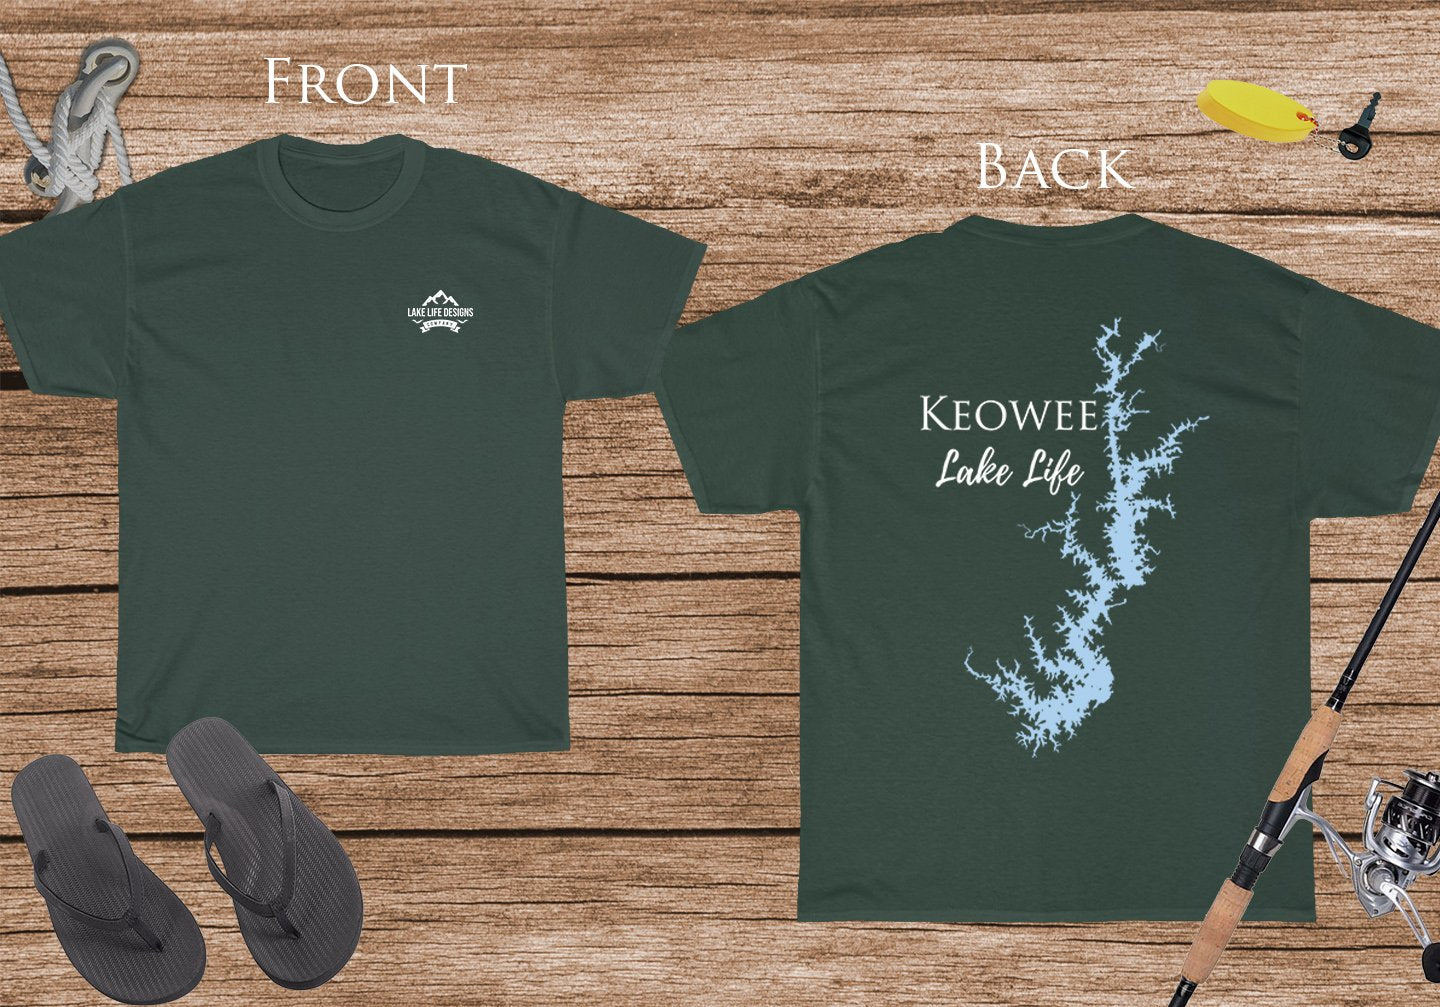 Keowee lake Life - Cotton Short Sleeved - FRONT & BACK PRINTED - Short Sleeved Cotton Tee - South Carolina Lake